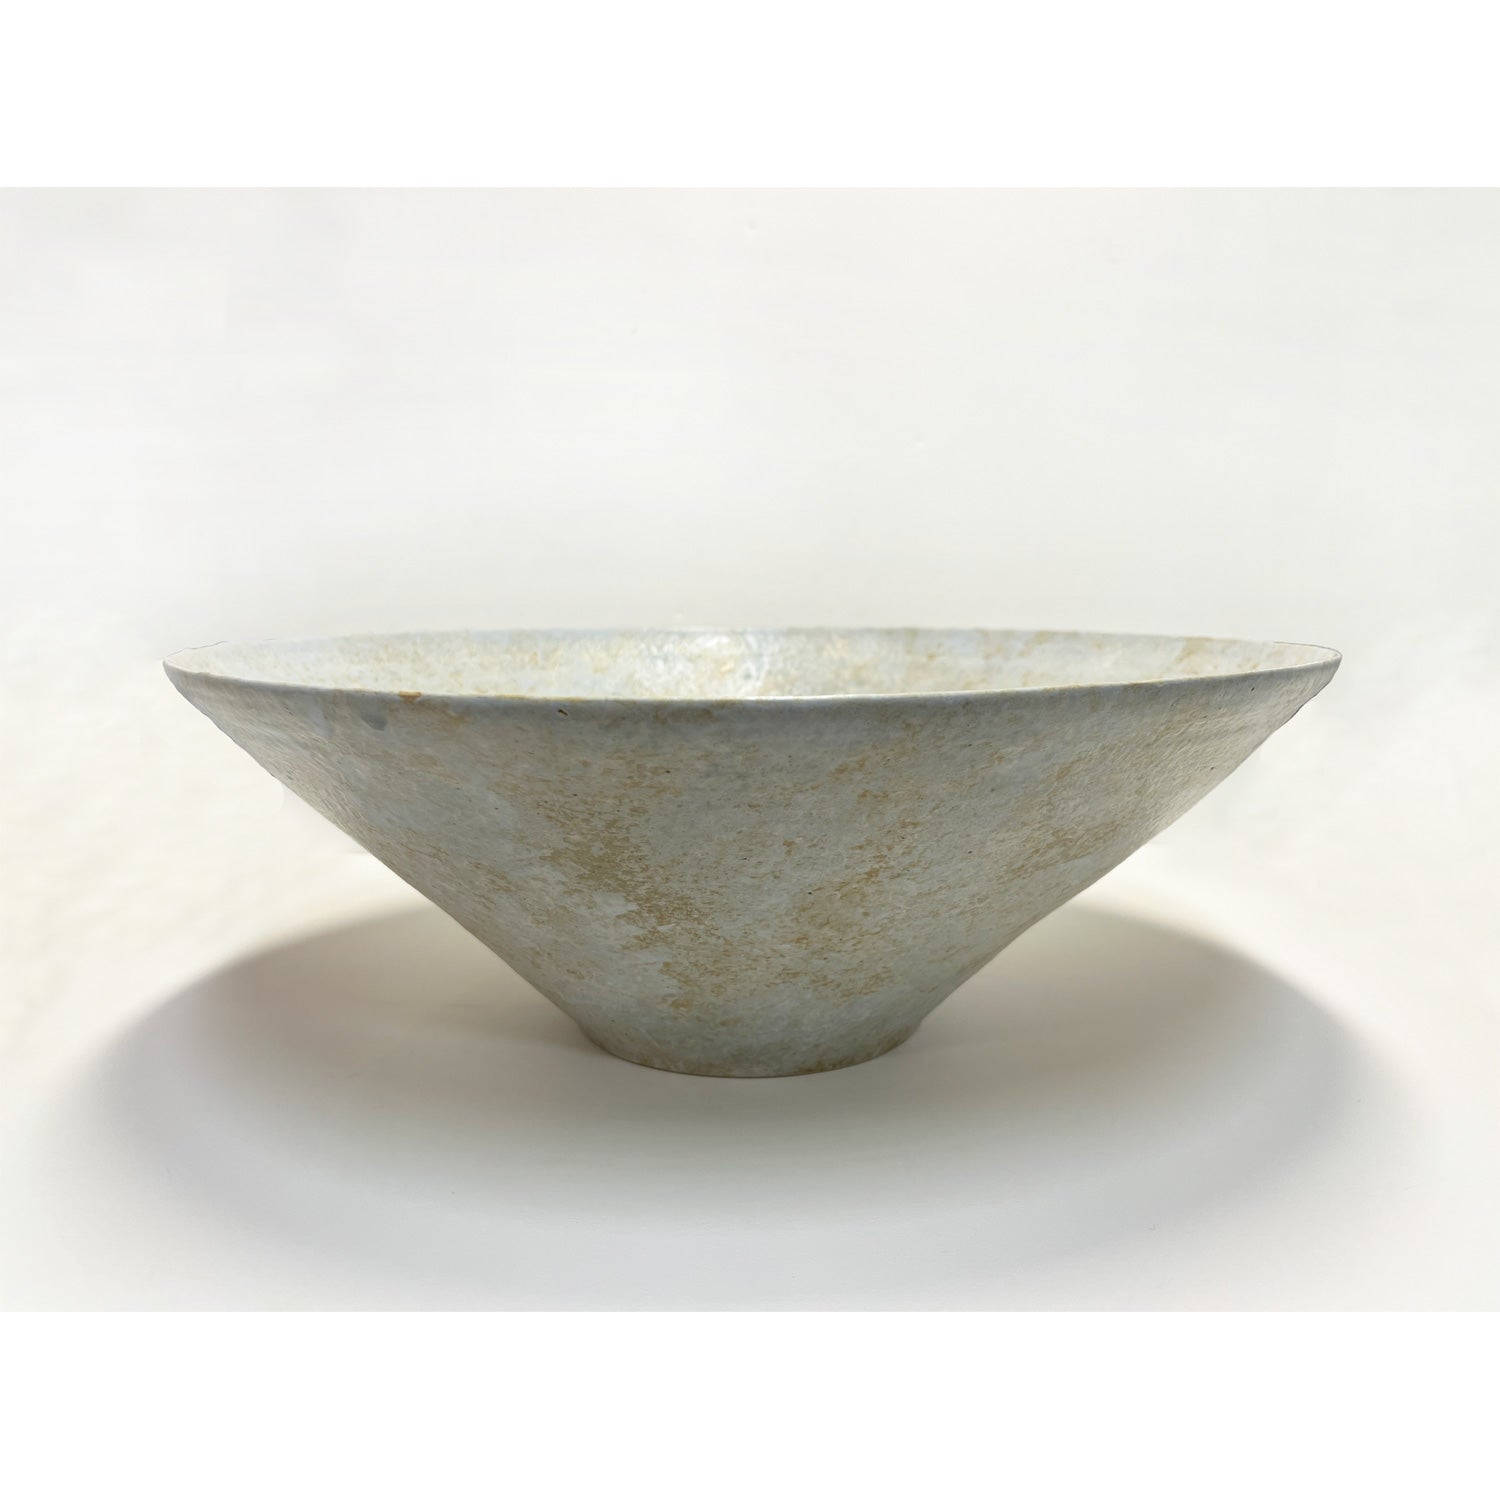 Makiko Hicher - Large Light Blue Bowl, 6" x 16.5" x 16.5"